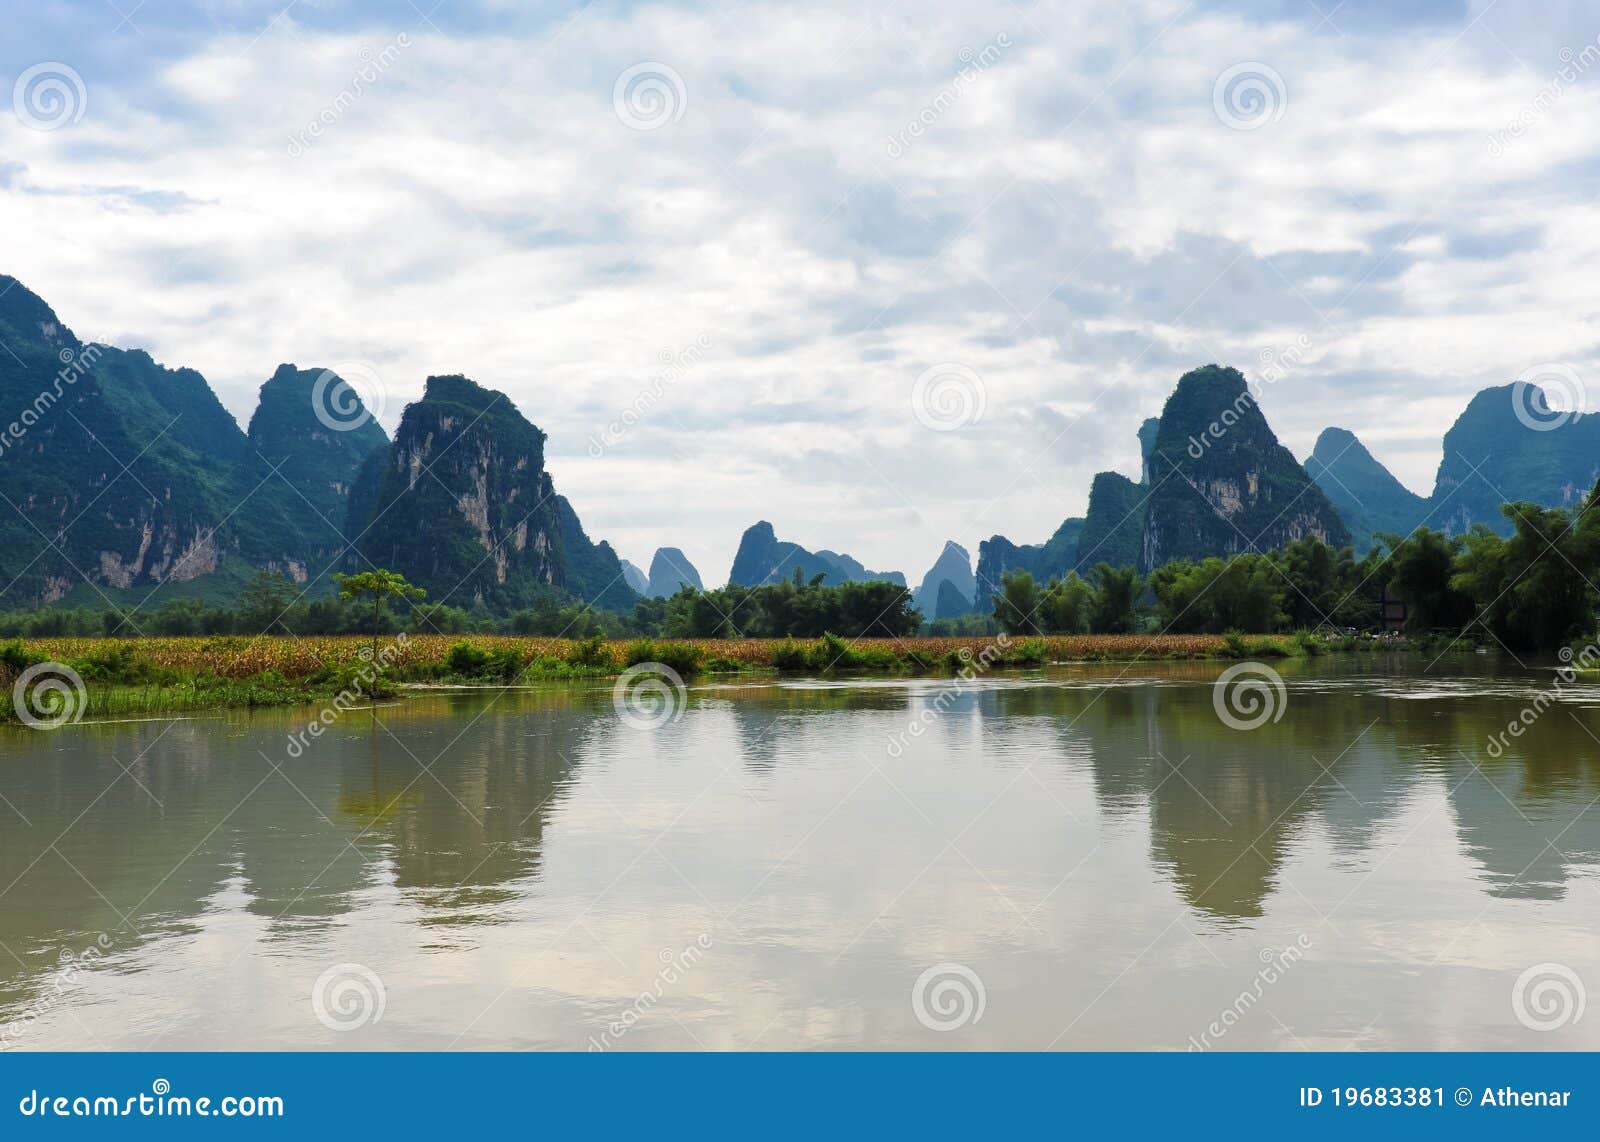 chinese beautiful landscapes